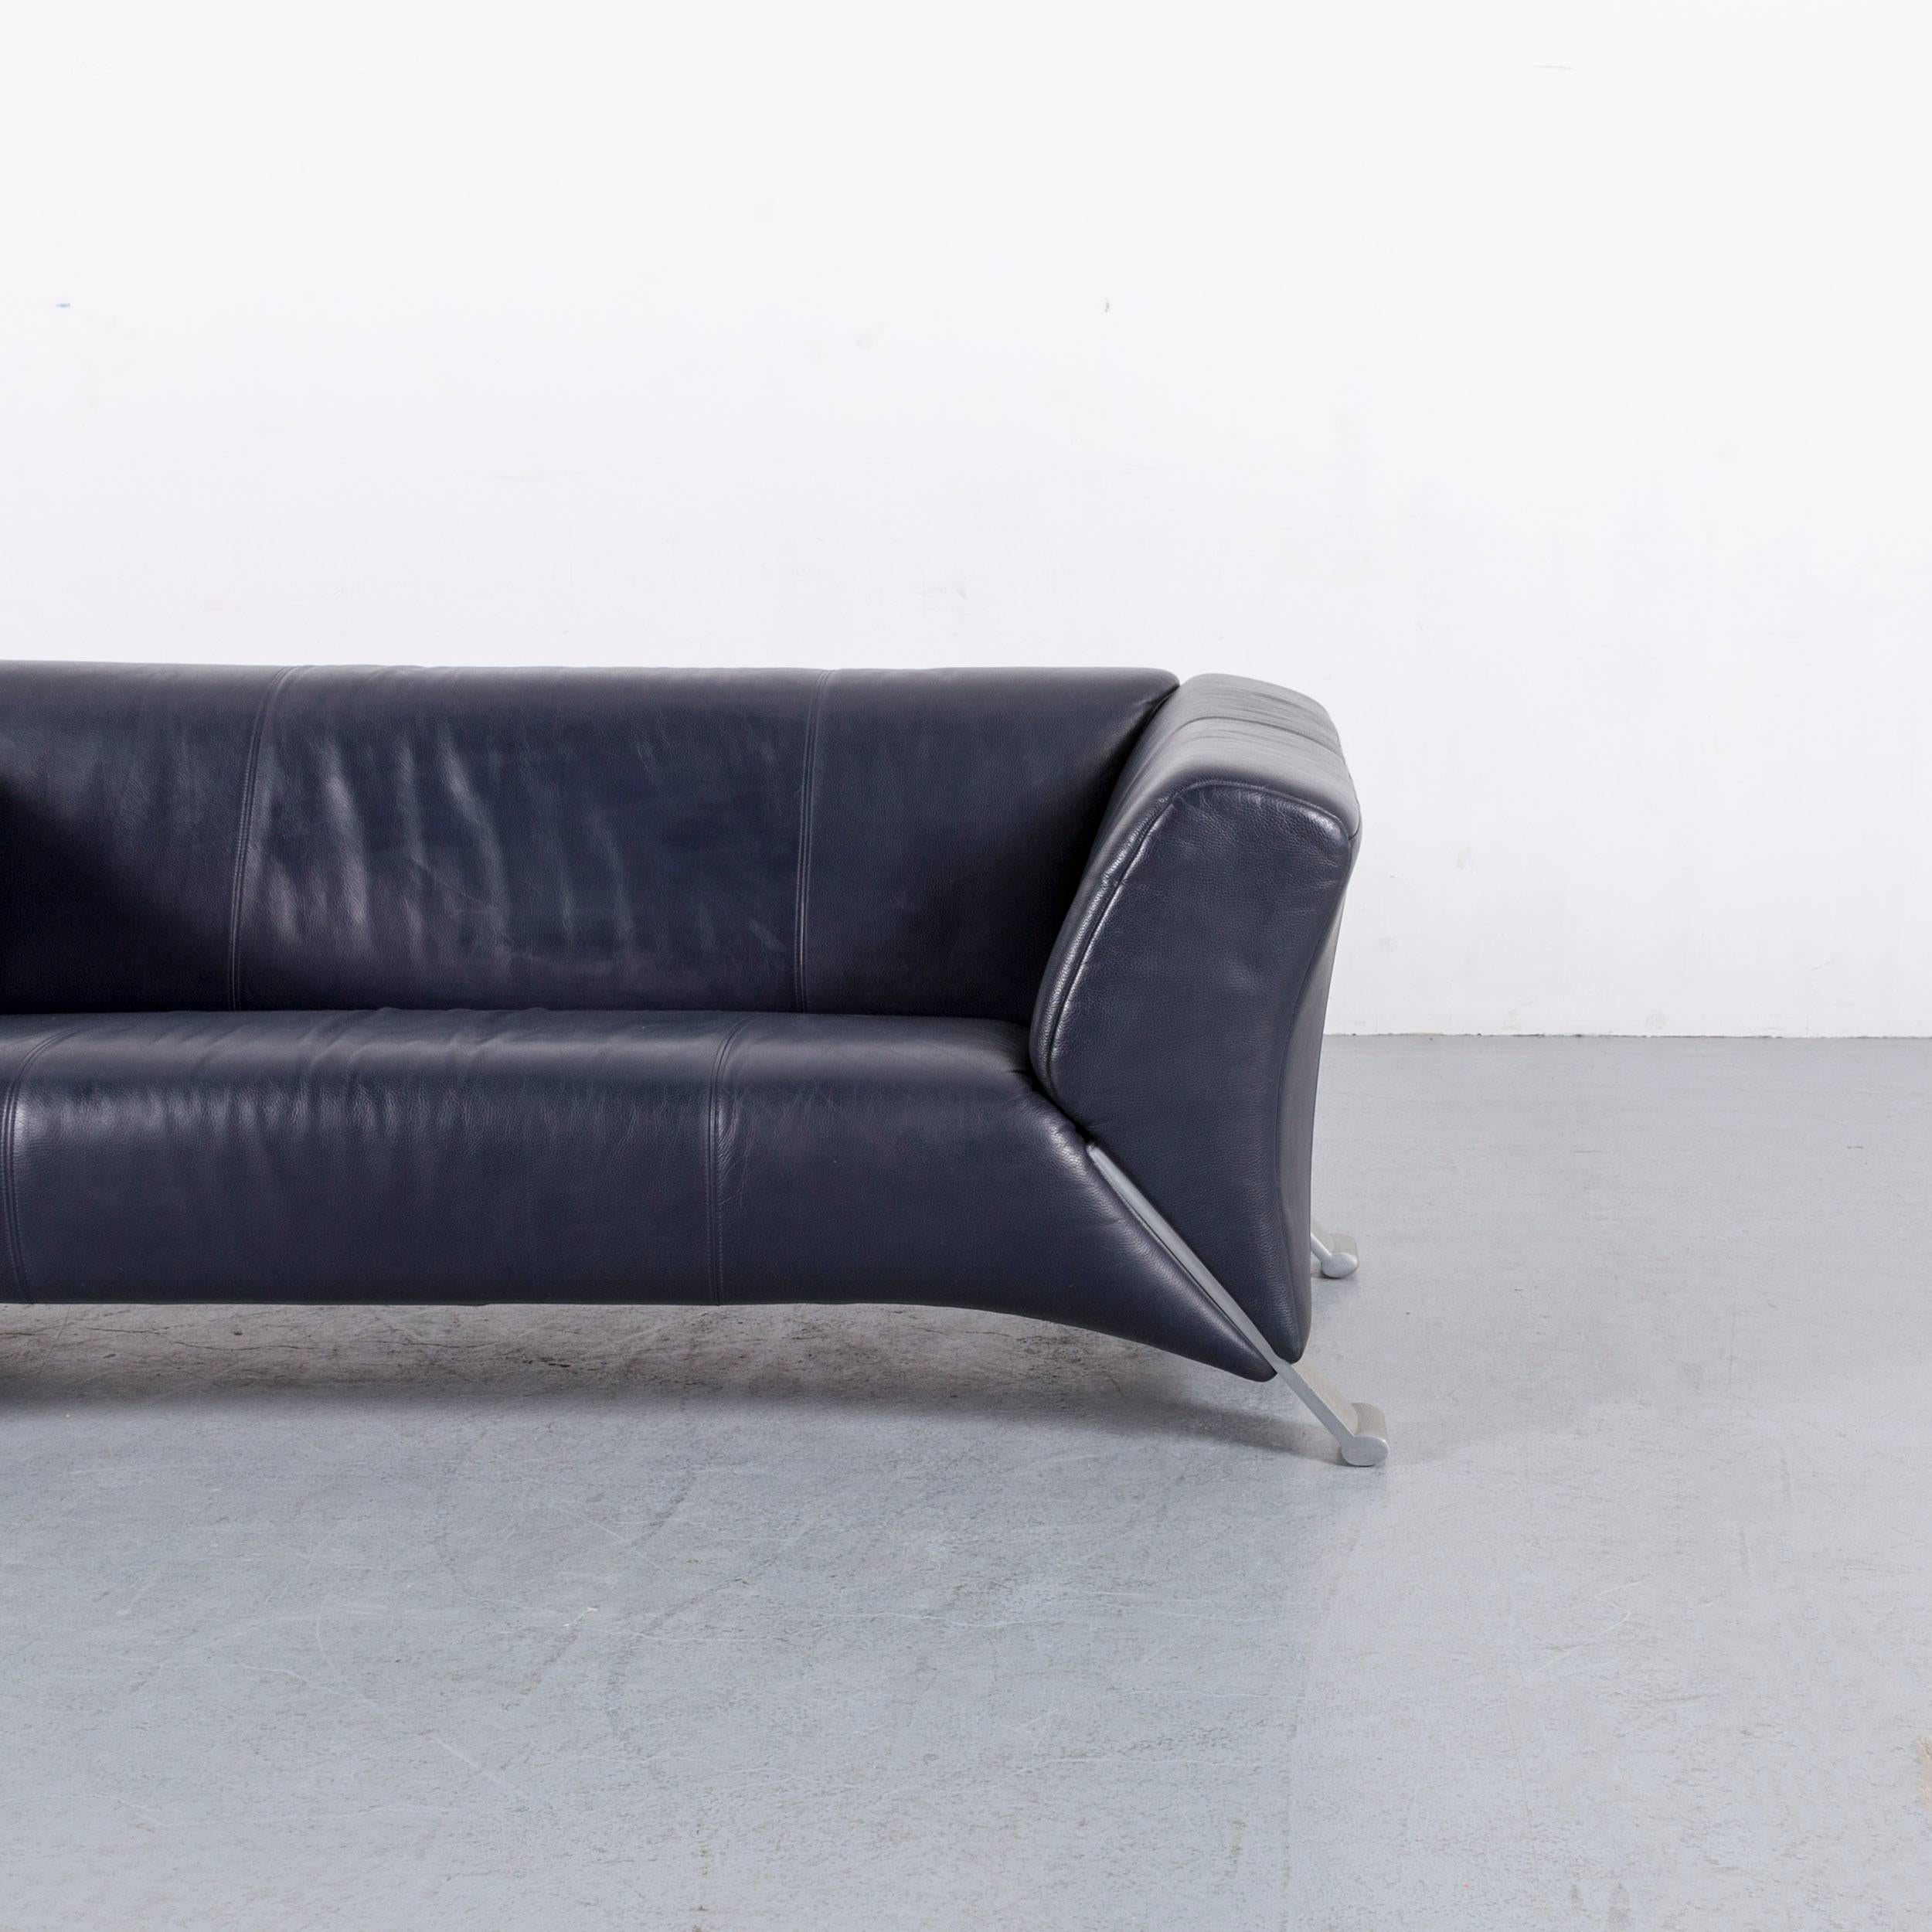 German Rolf Benz 322 Designer Sofa Dark Blue Two-Seat Leather Modern Couch Metal Feet